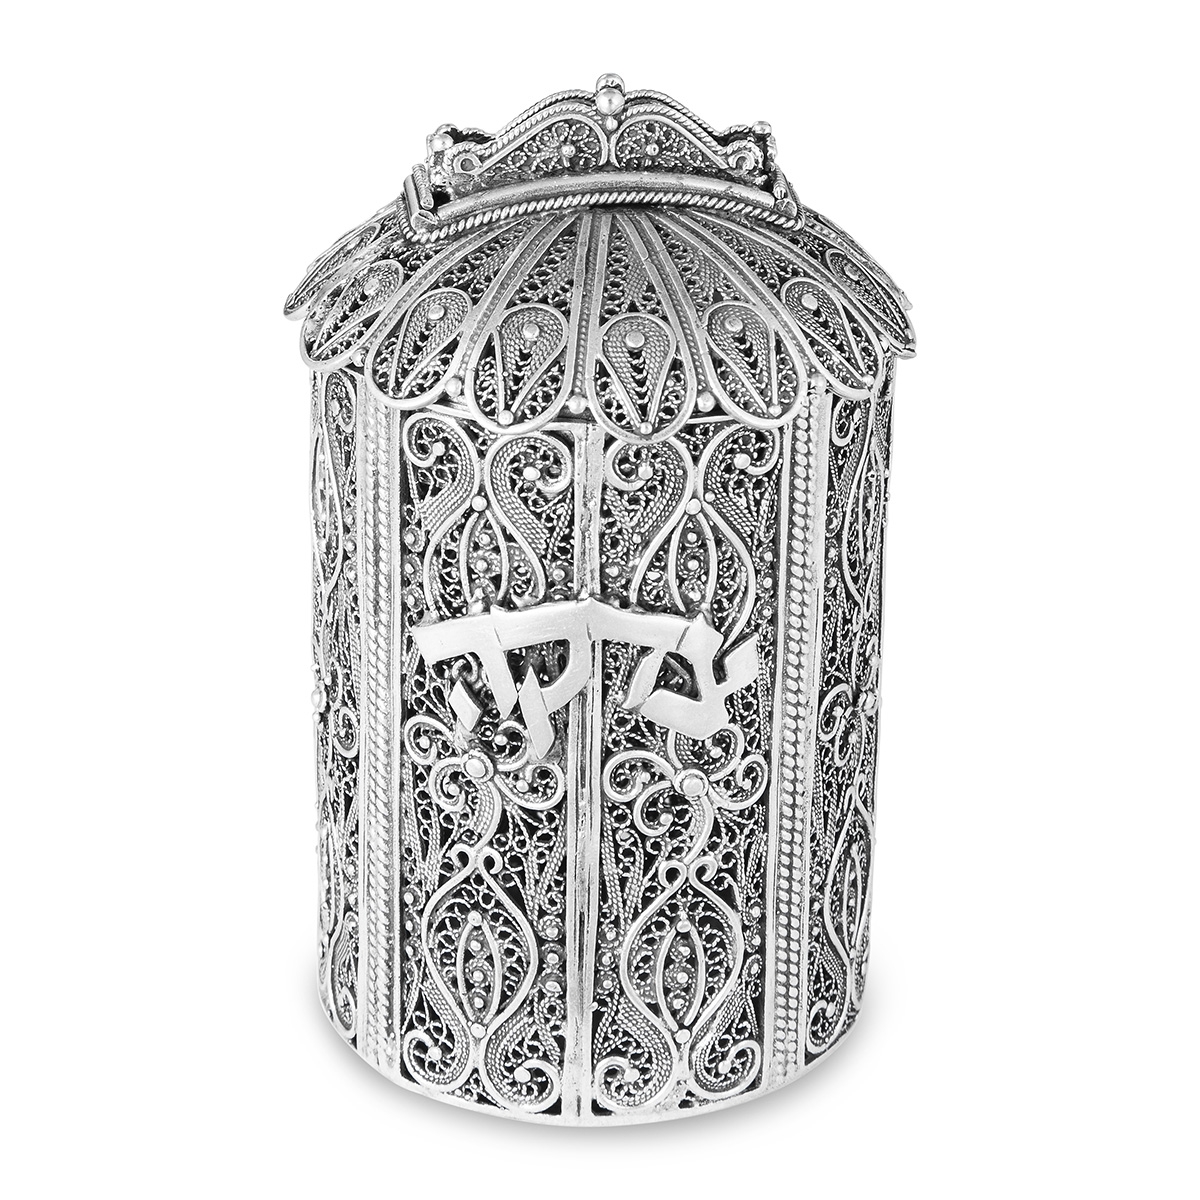 Traditional Yemenite Art Handcrafted Sterling Silver Cylindrical Tzedakah Box With Filigree Design - 1